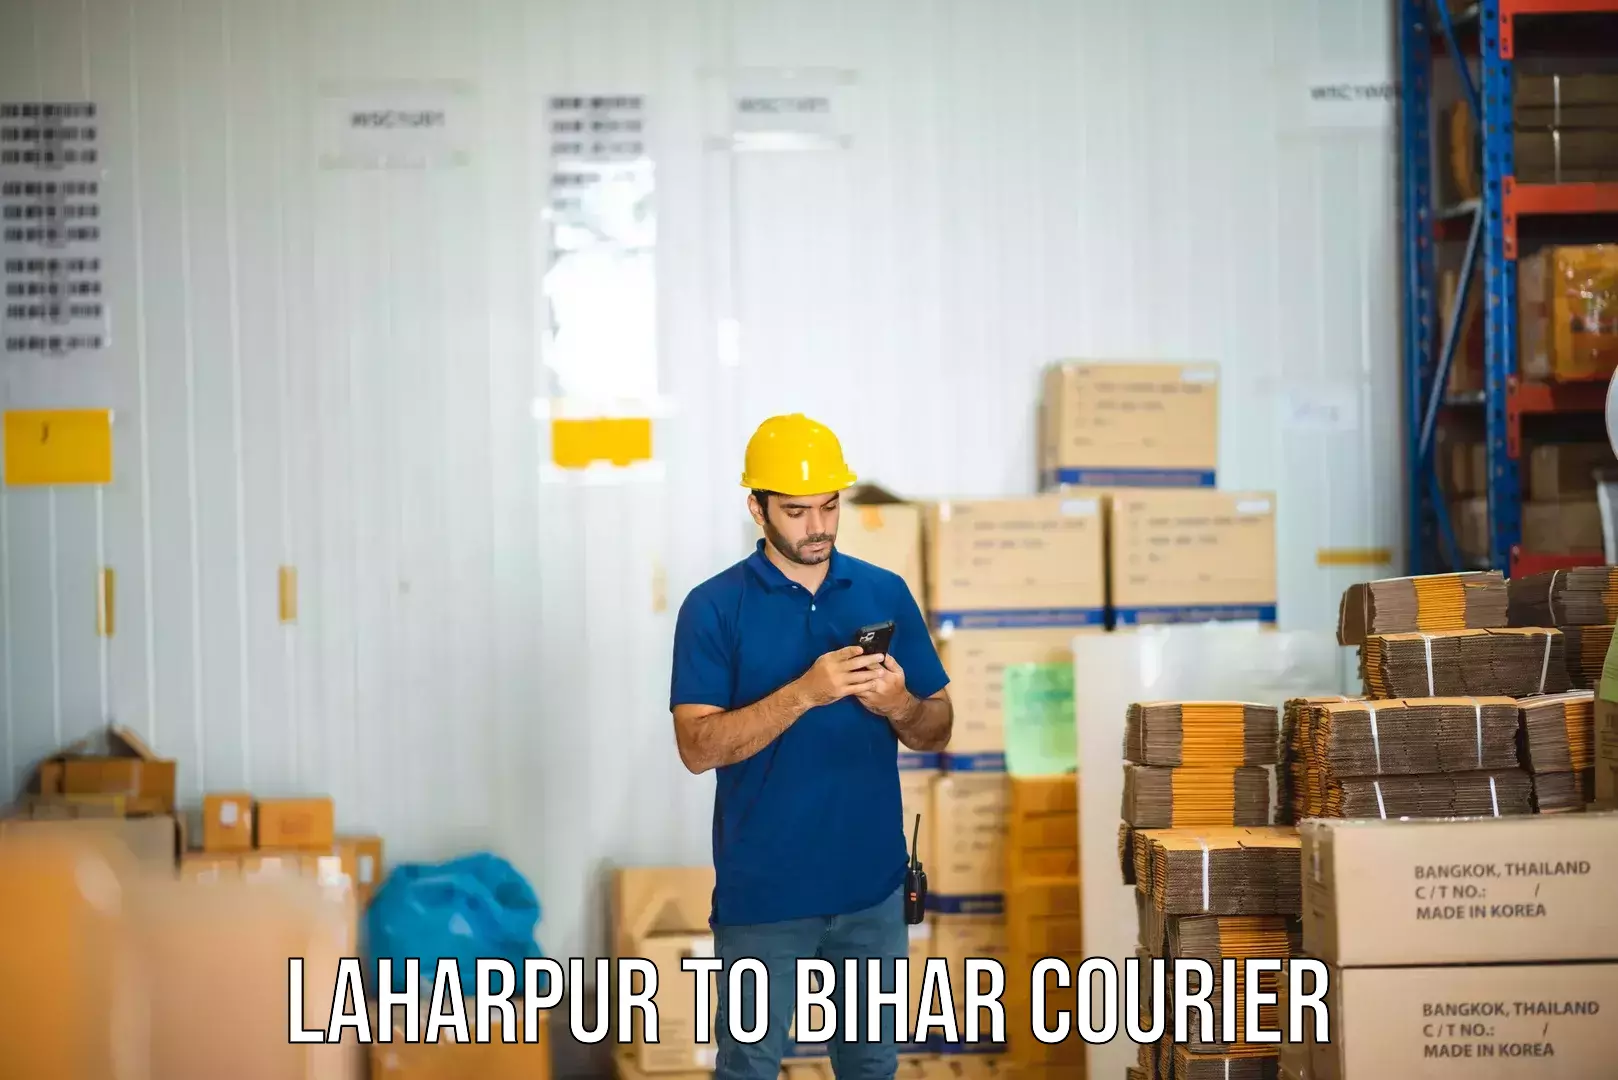 Courier service innovation Laharpur to Bharwara